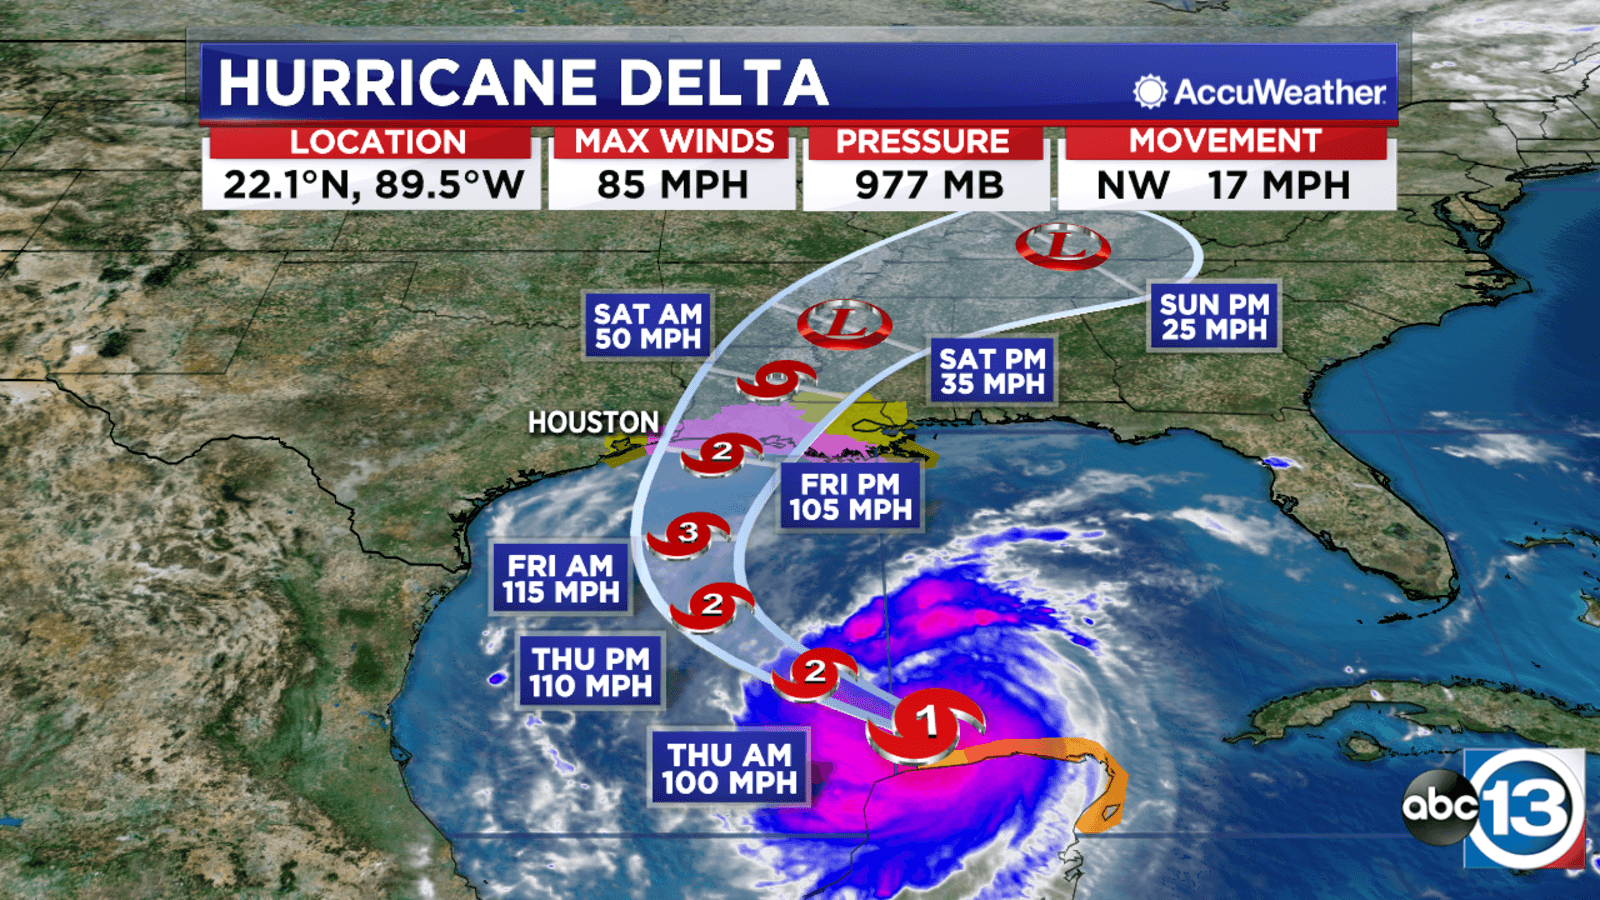 Louisiana Casinos Close as Hurricane Delta Targets the Pelican State - 0 Some Louisiana ...